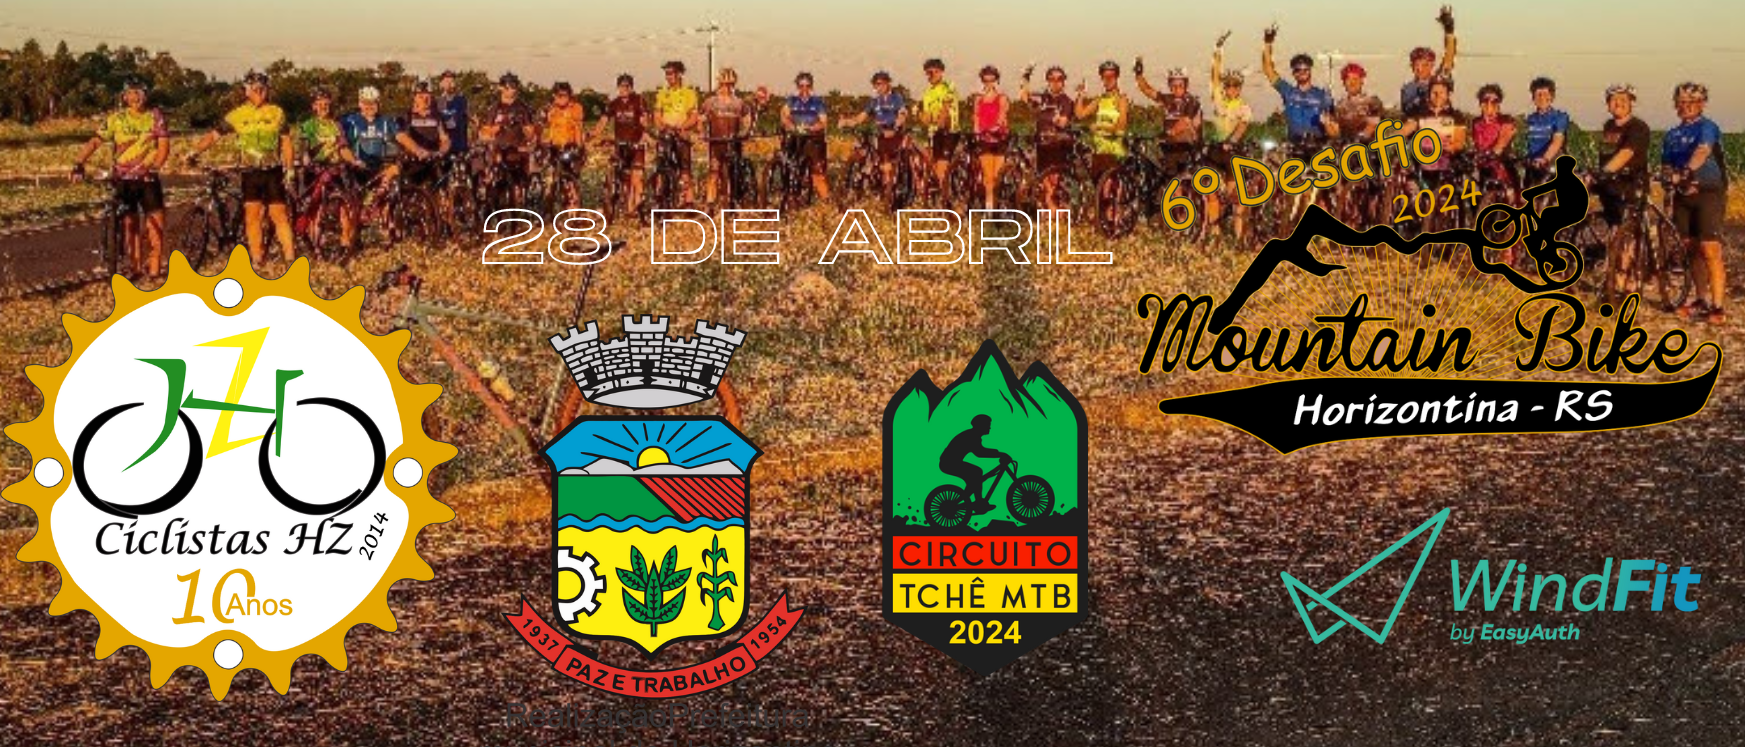 6º Desafio Mountain Bike MTB/ Horizontina - 2ª etapa Circuito Tchê MTB 2024